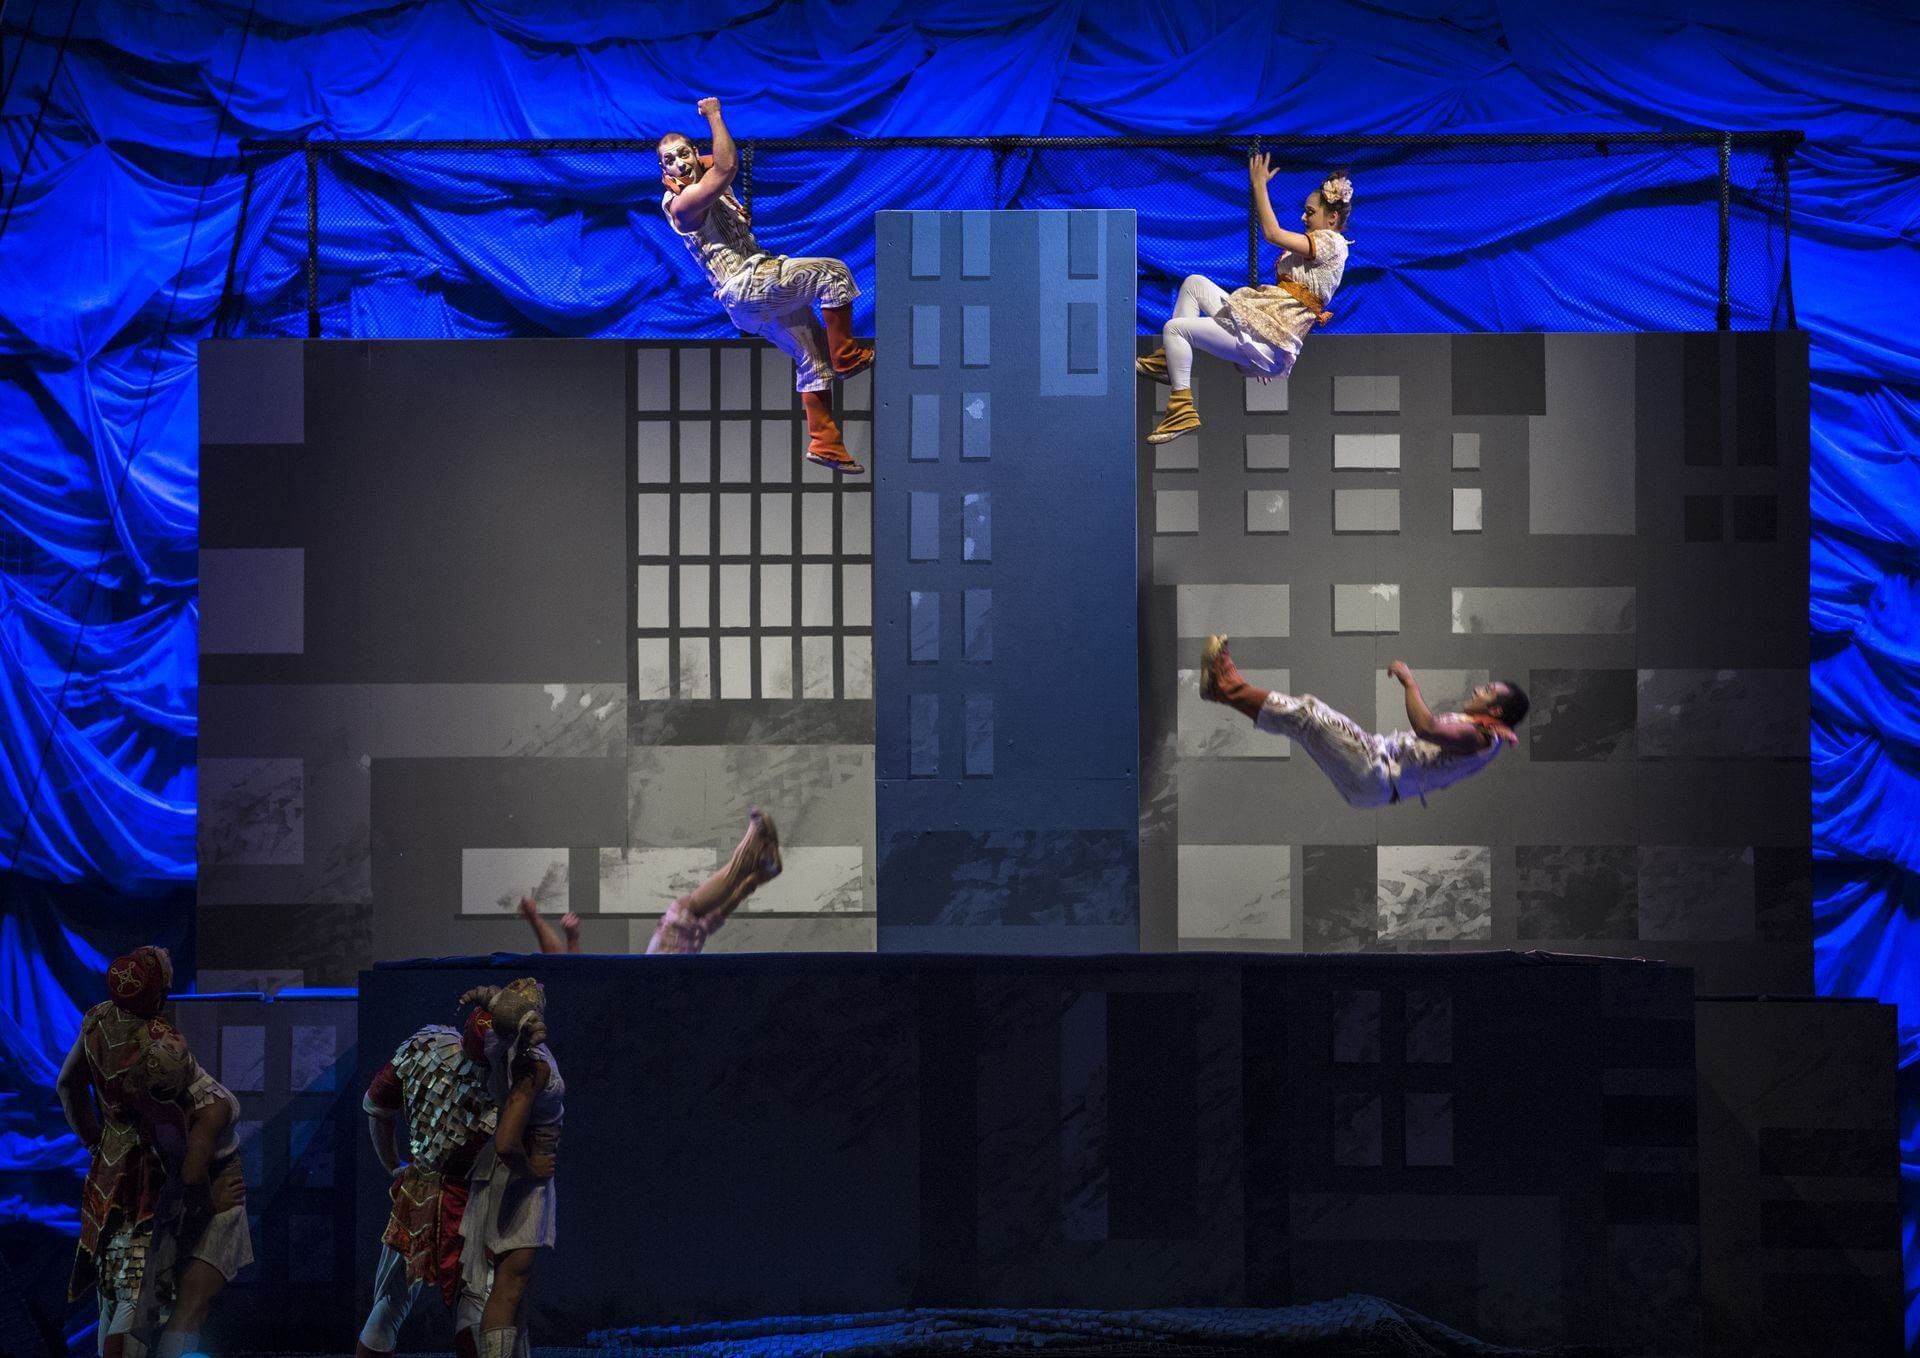 Scalada by Cirque du Soleil 2013: Acrobacias coordinadas en grupo